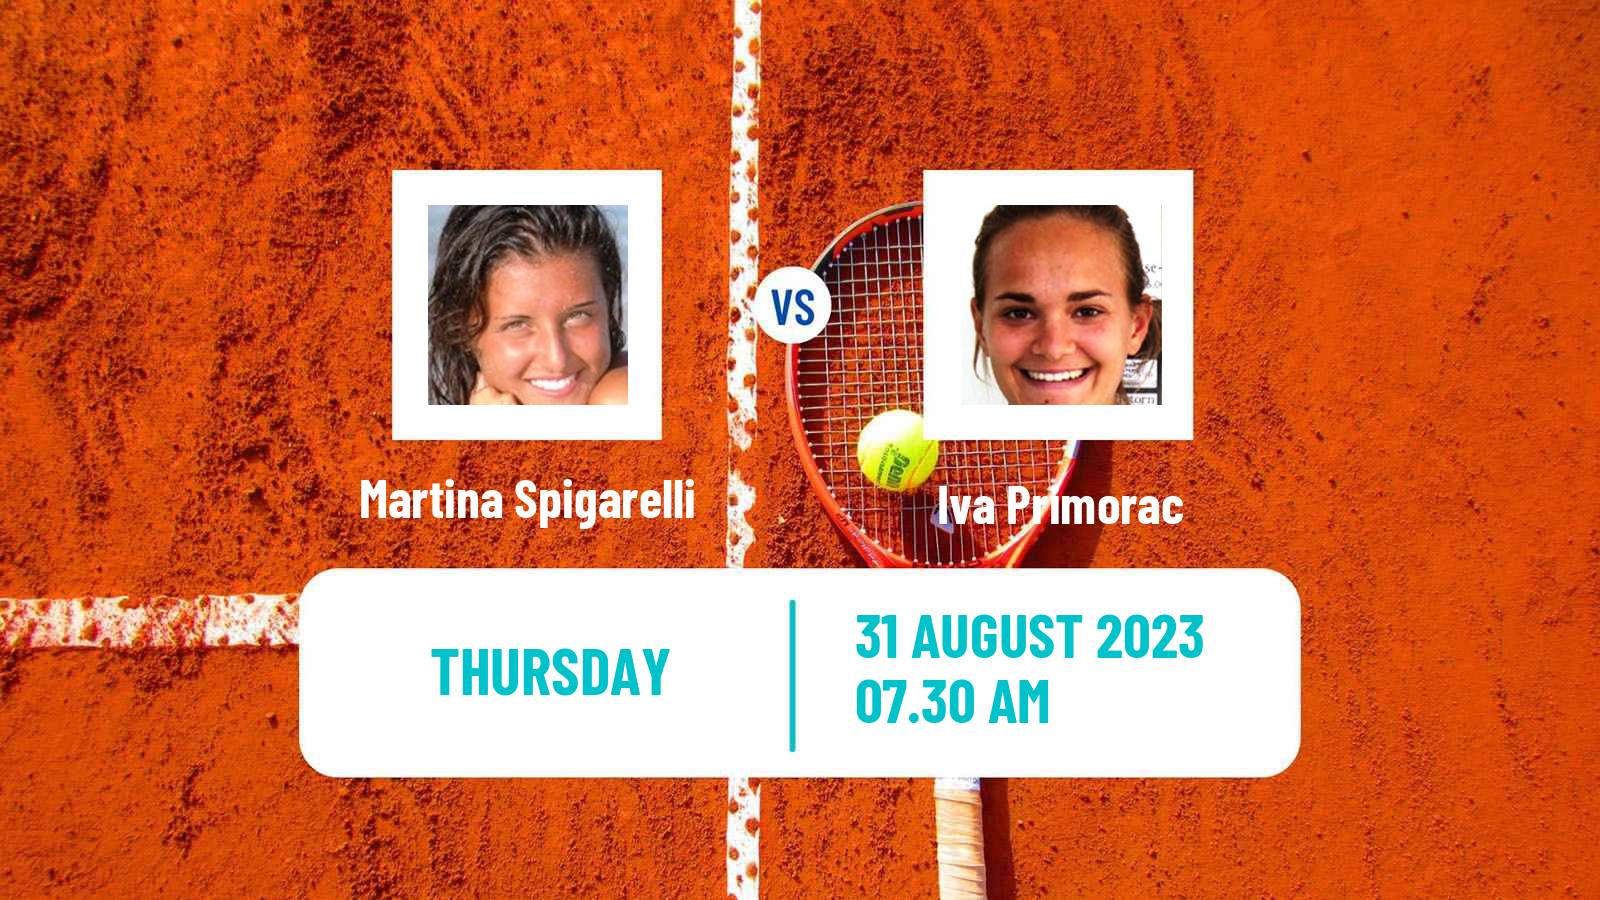 Tennis ITF W25 Trieste Women Martina Spigarelli - Iva Primorac